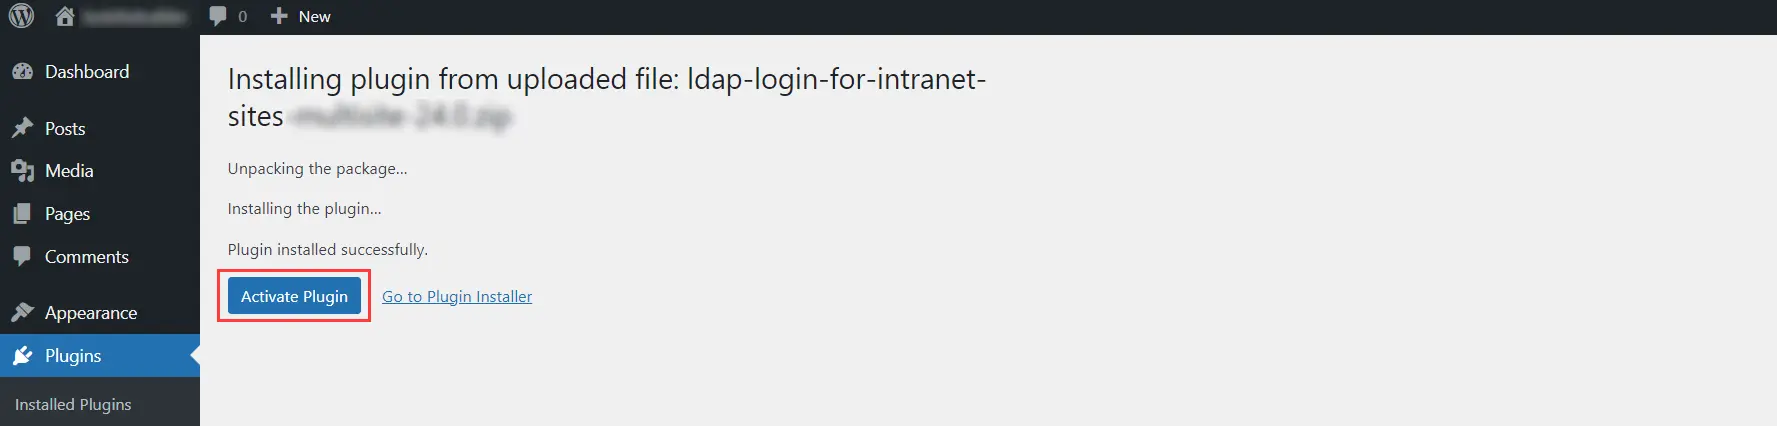 Install LDAP plugin